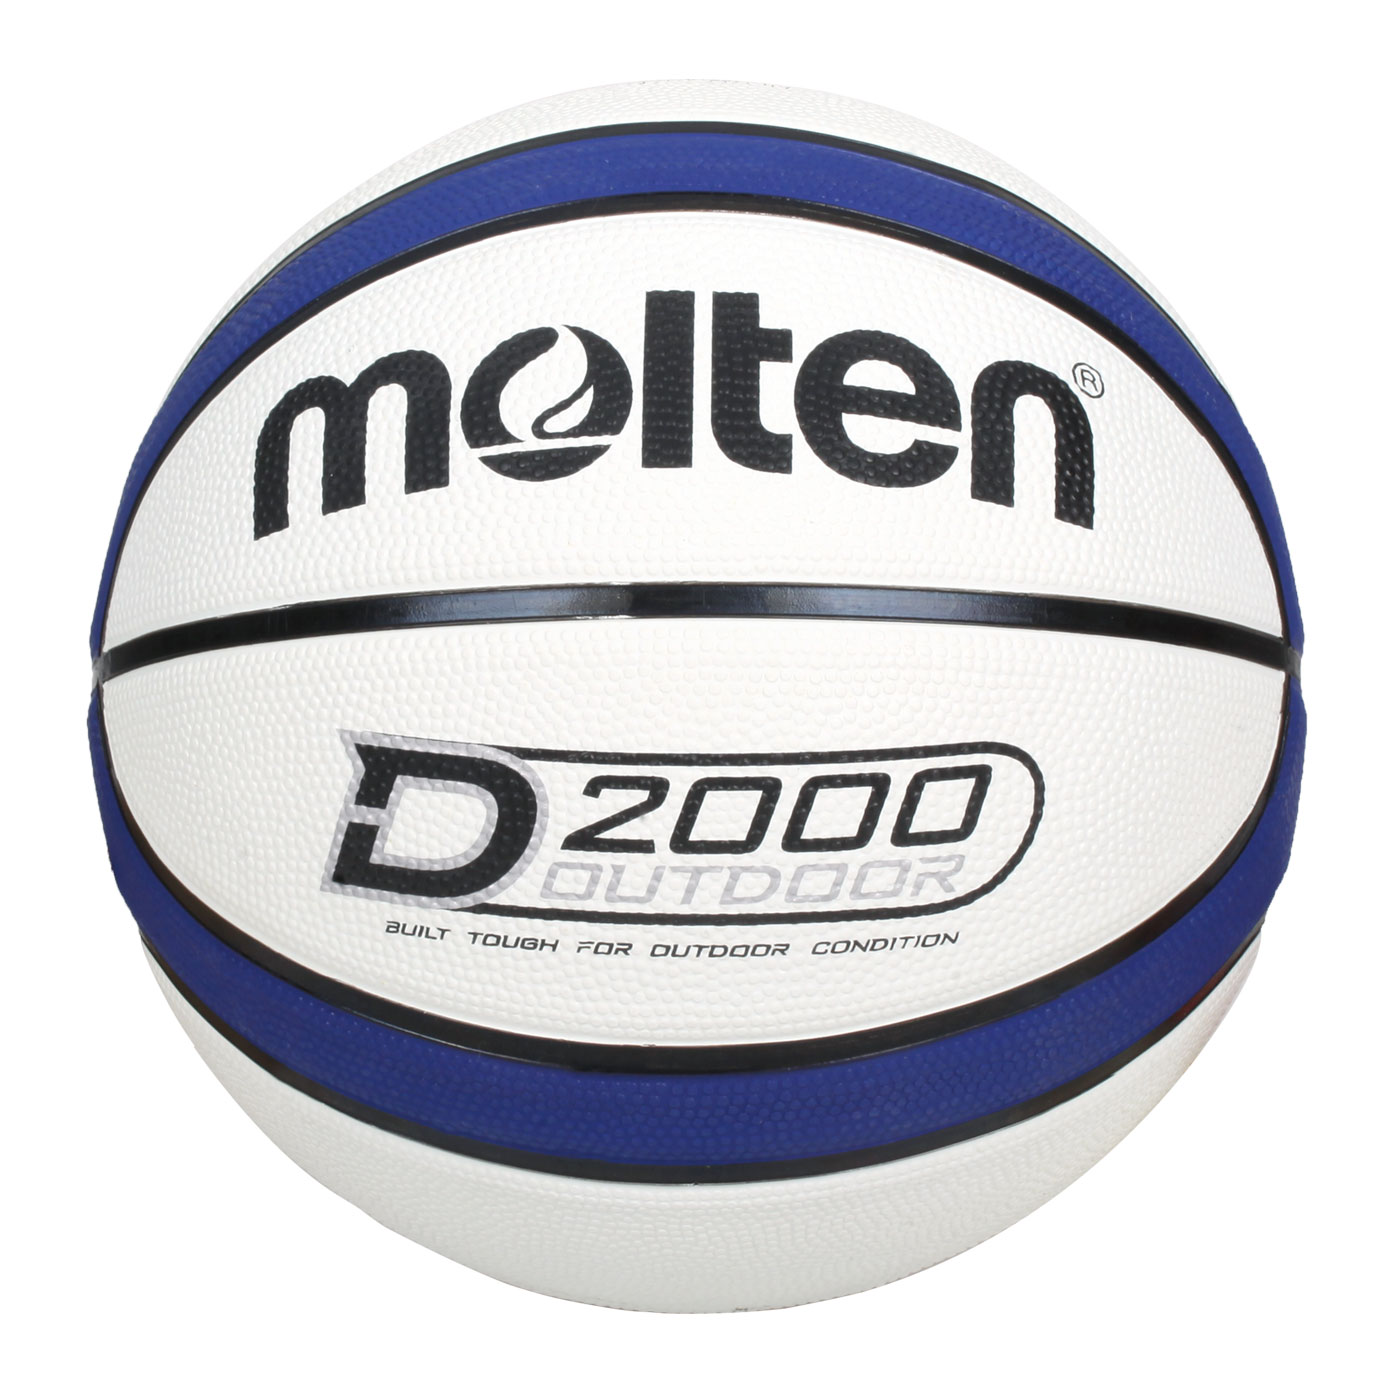 Molten 12片深溝橡膠7號籃球 B7D2005-WB - 白藍黑